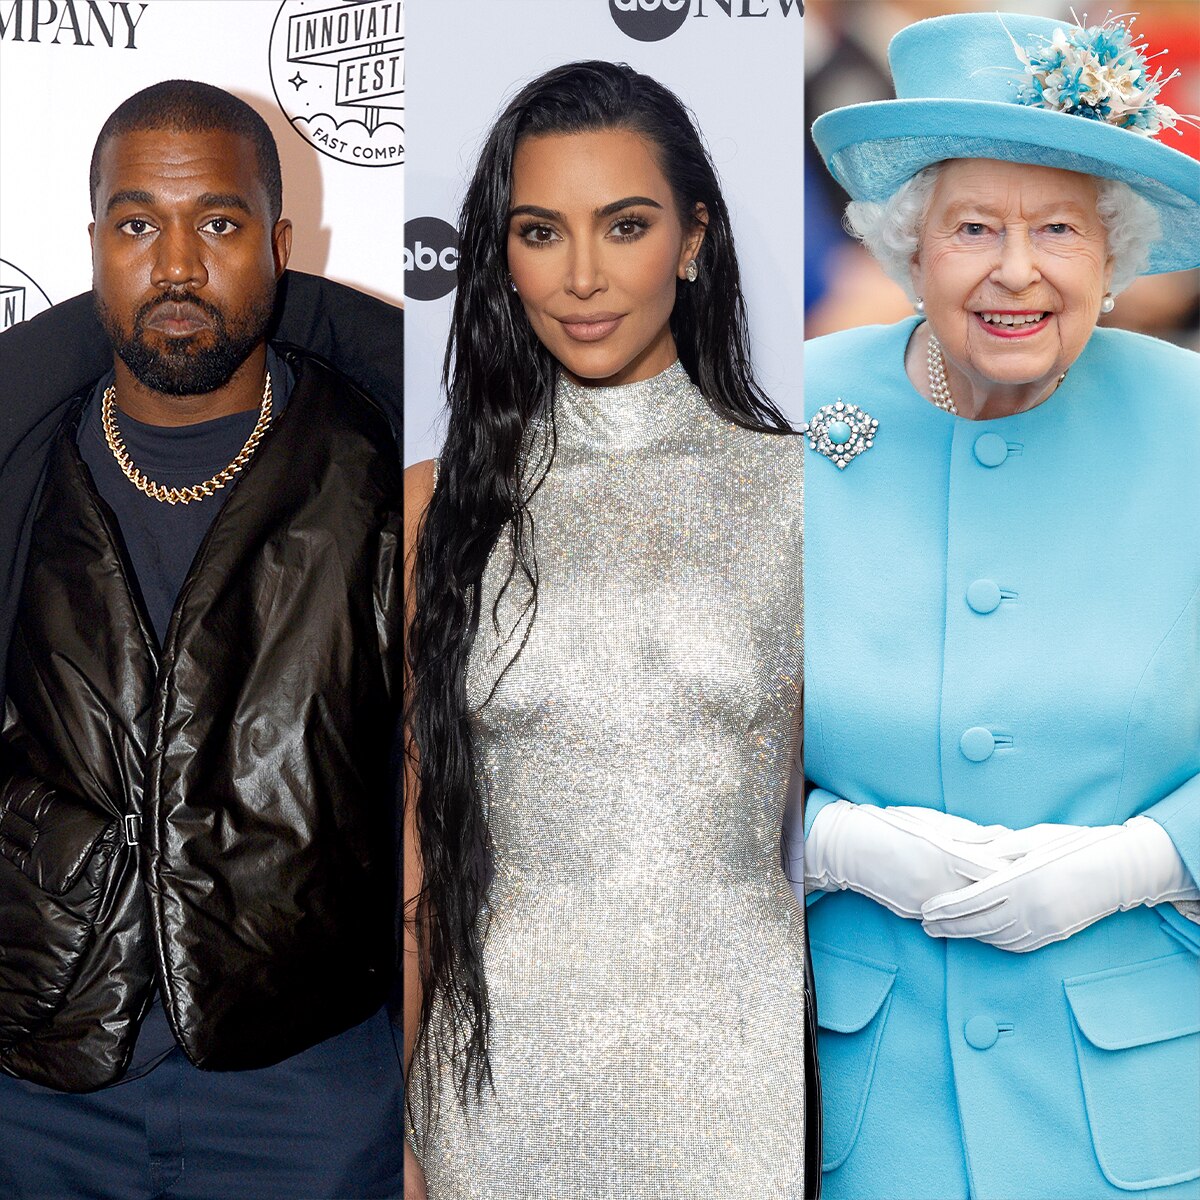 Queen Elizabeth II, Kim Kardashian, Kanye West